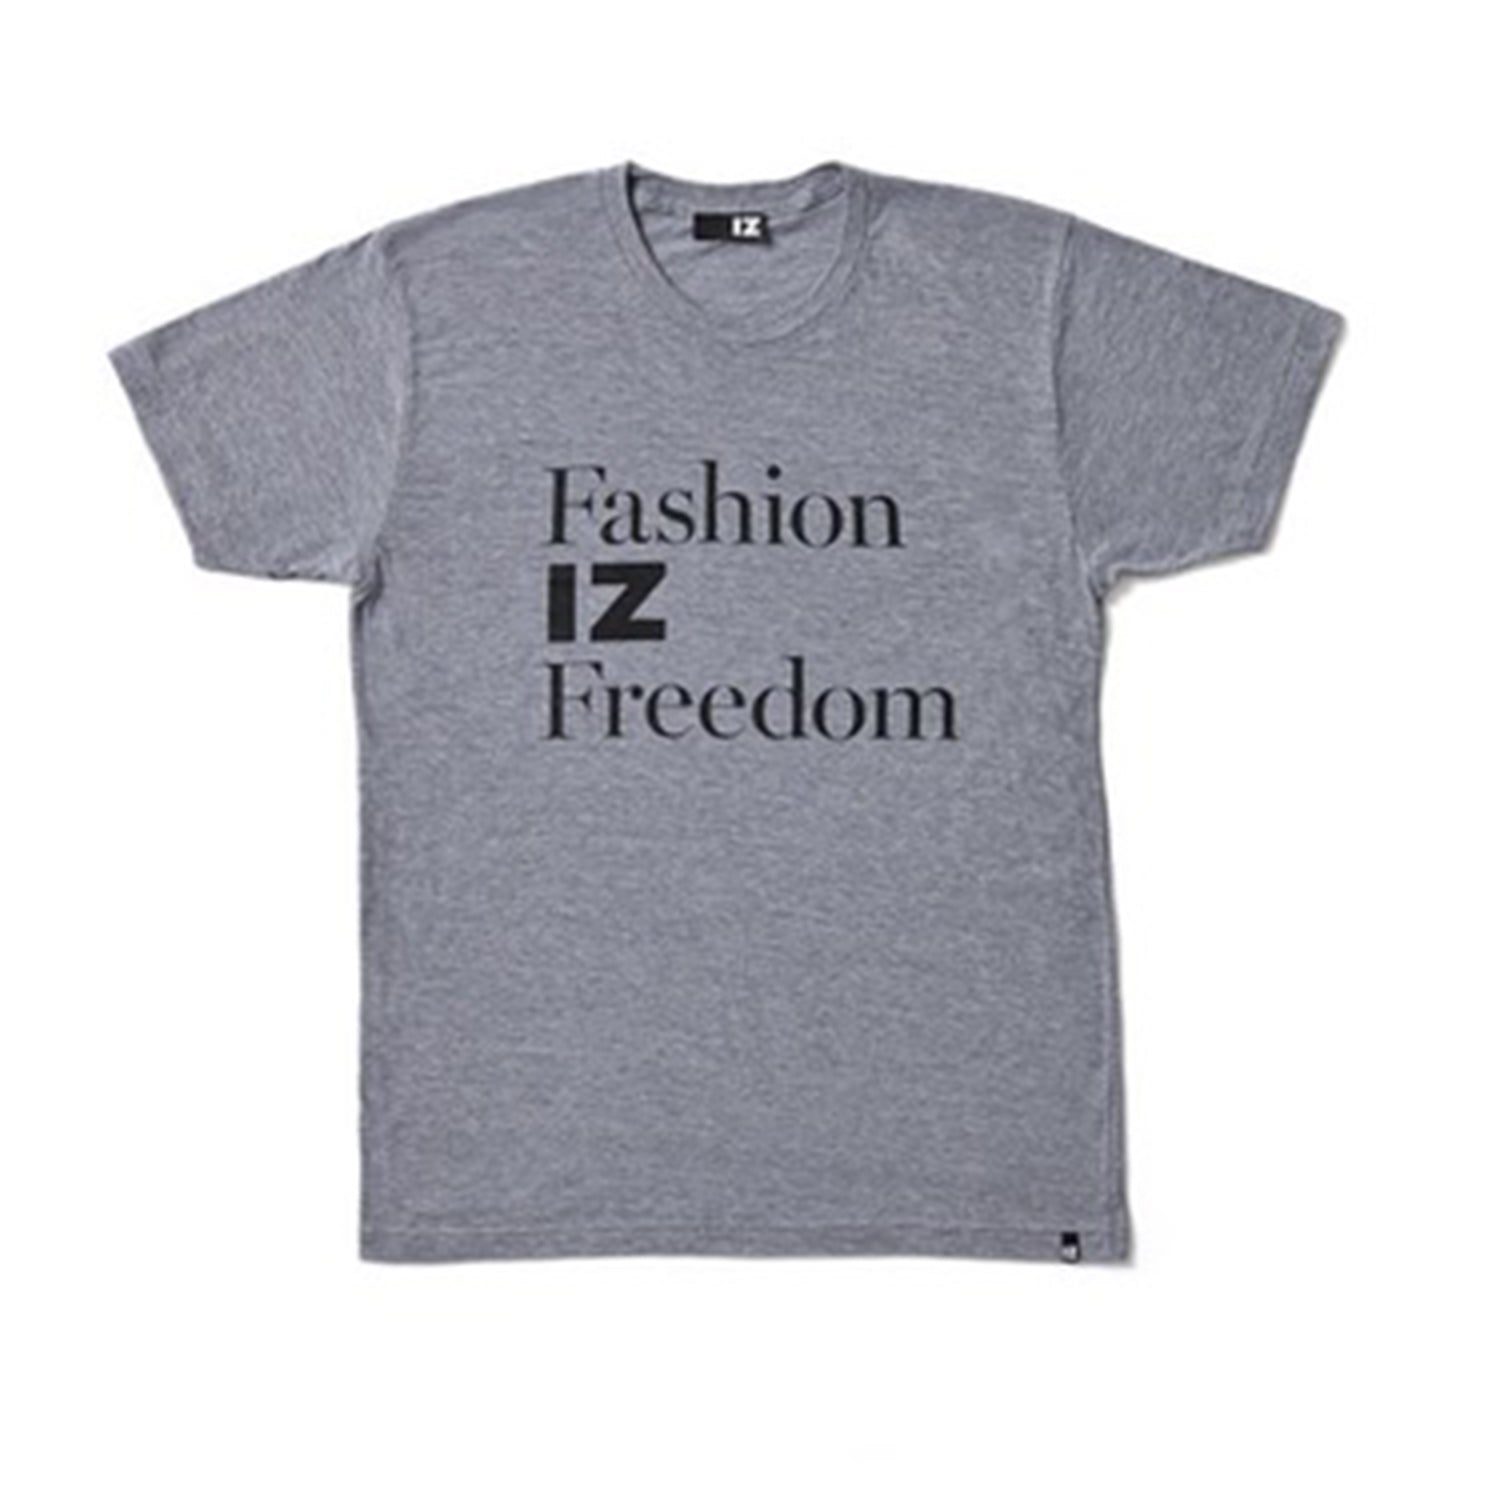 Fashion IZ Freedom T-shirt